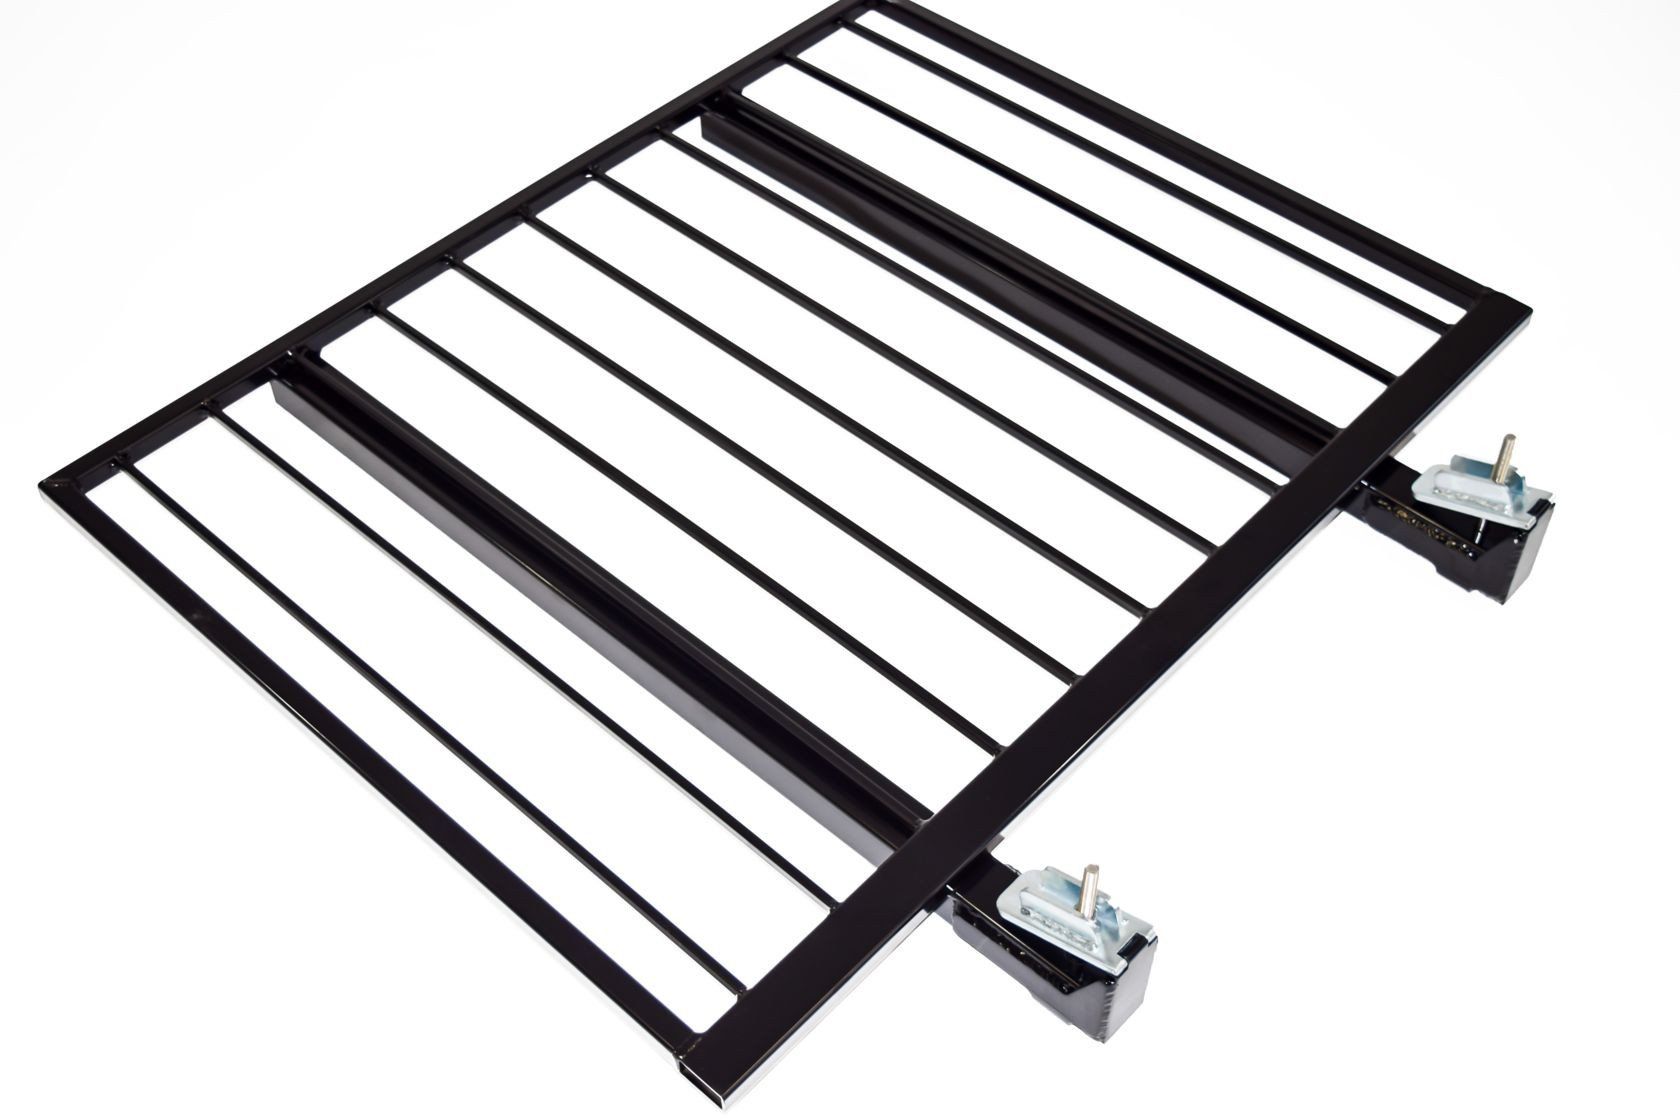 Aluminum Guardrail Frame (Code compliant for public use) Black Finish 4'x42